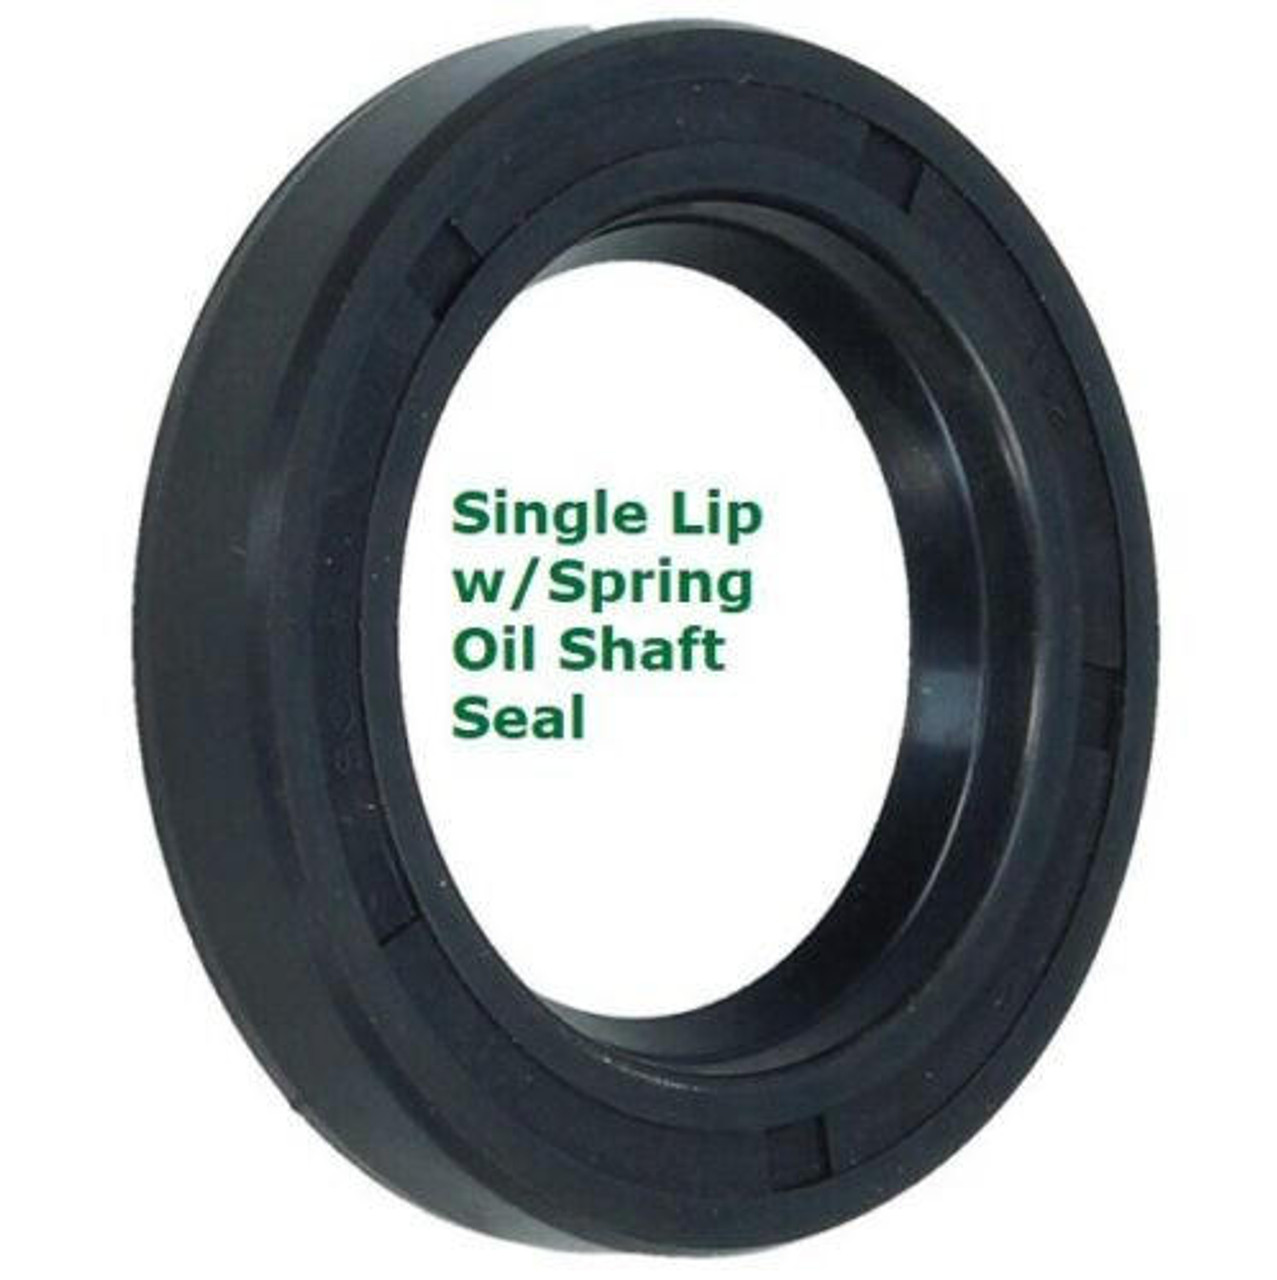 Metric Oil Shaft Seal 70 x 90 x 10mm Single Lip  Ref# CR692629 or CR564989 or CR564730